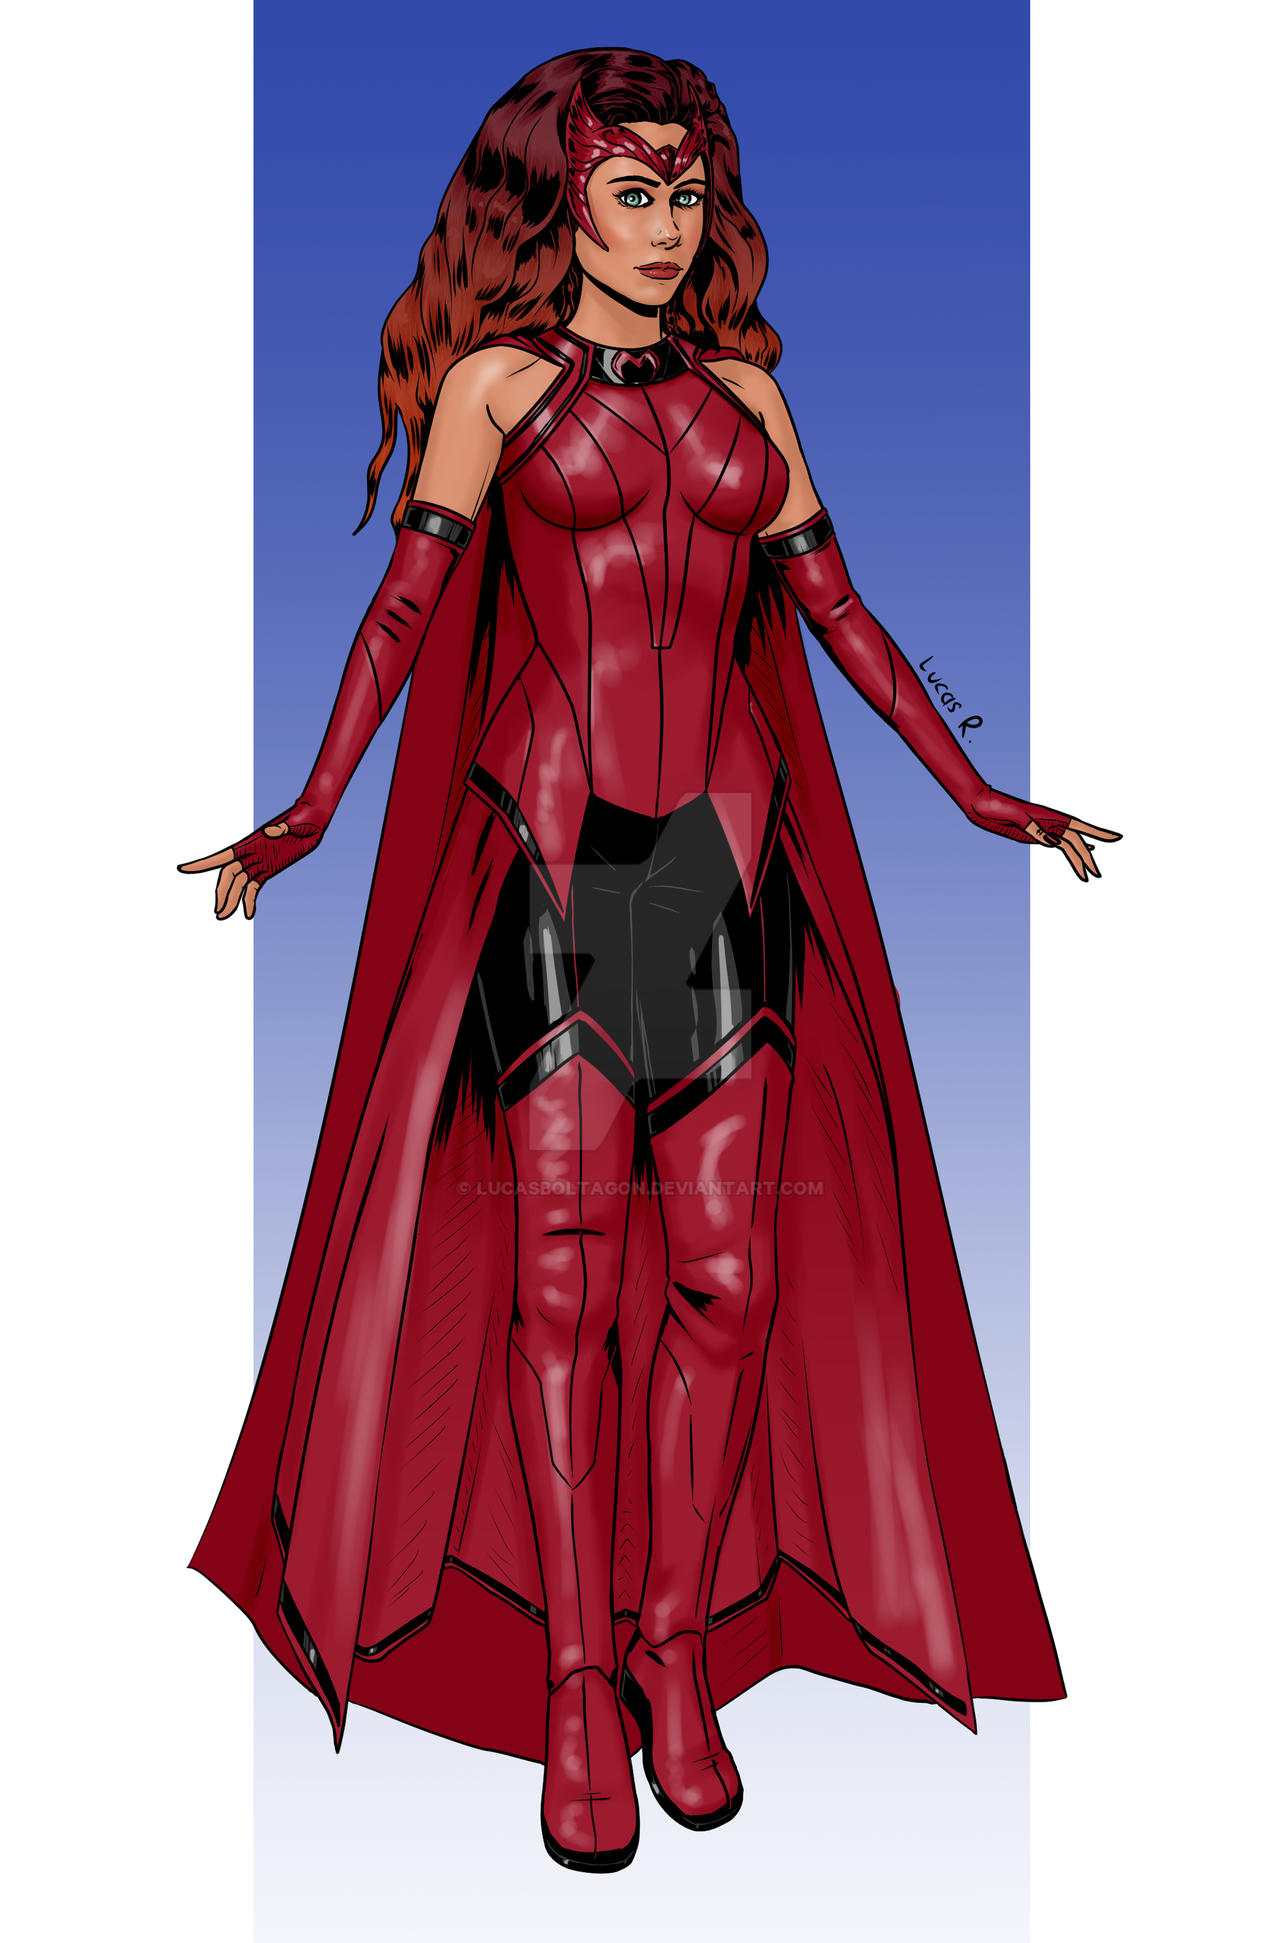 Scarlet Witch - MCU design Comicbook - 06 2021 by LucasBoltagon on